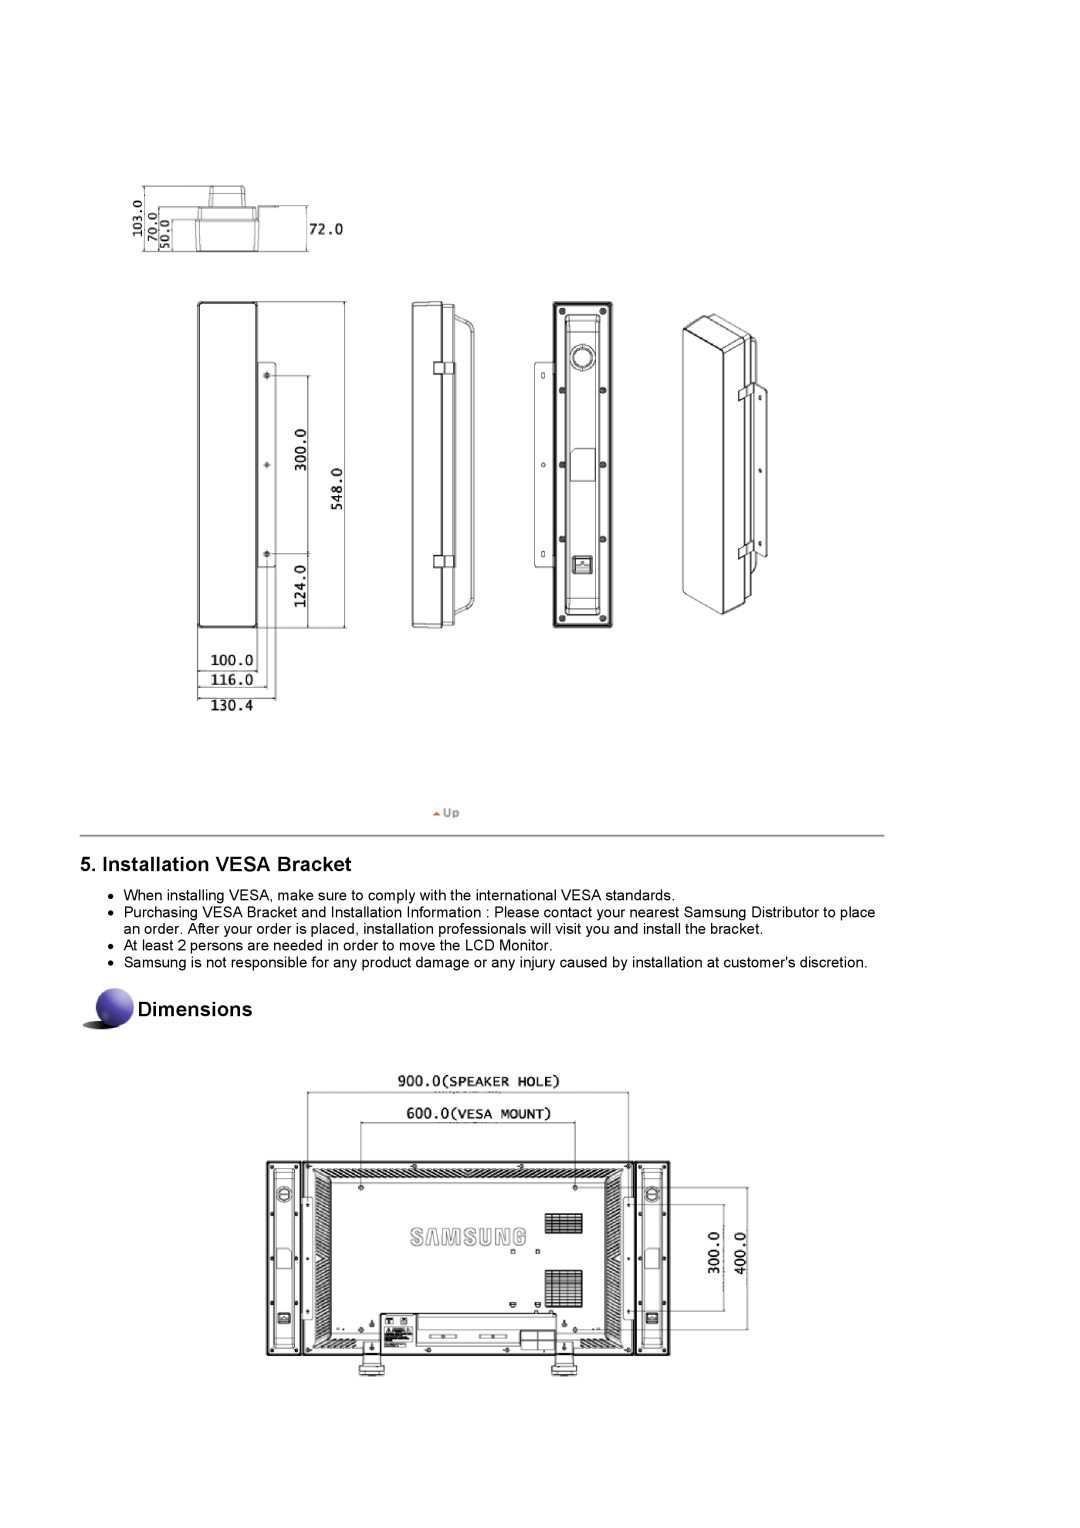 Samsung 400DX, 460DX specifications Installation VESA Bracket, Dimensions 